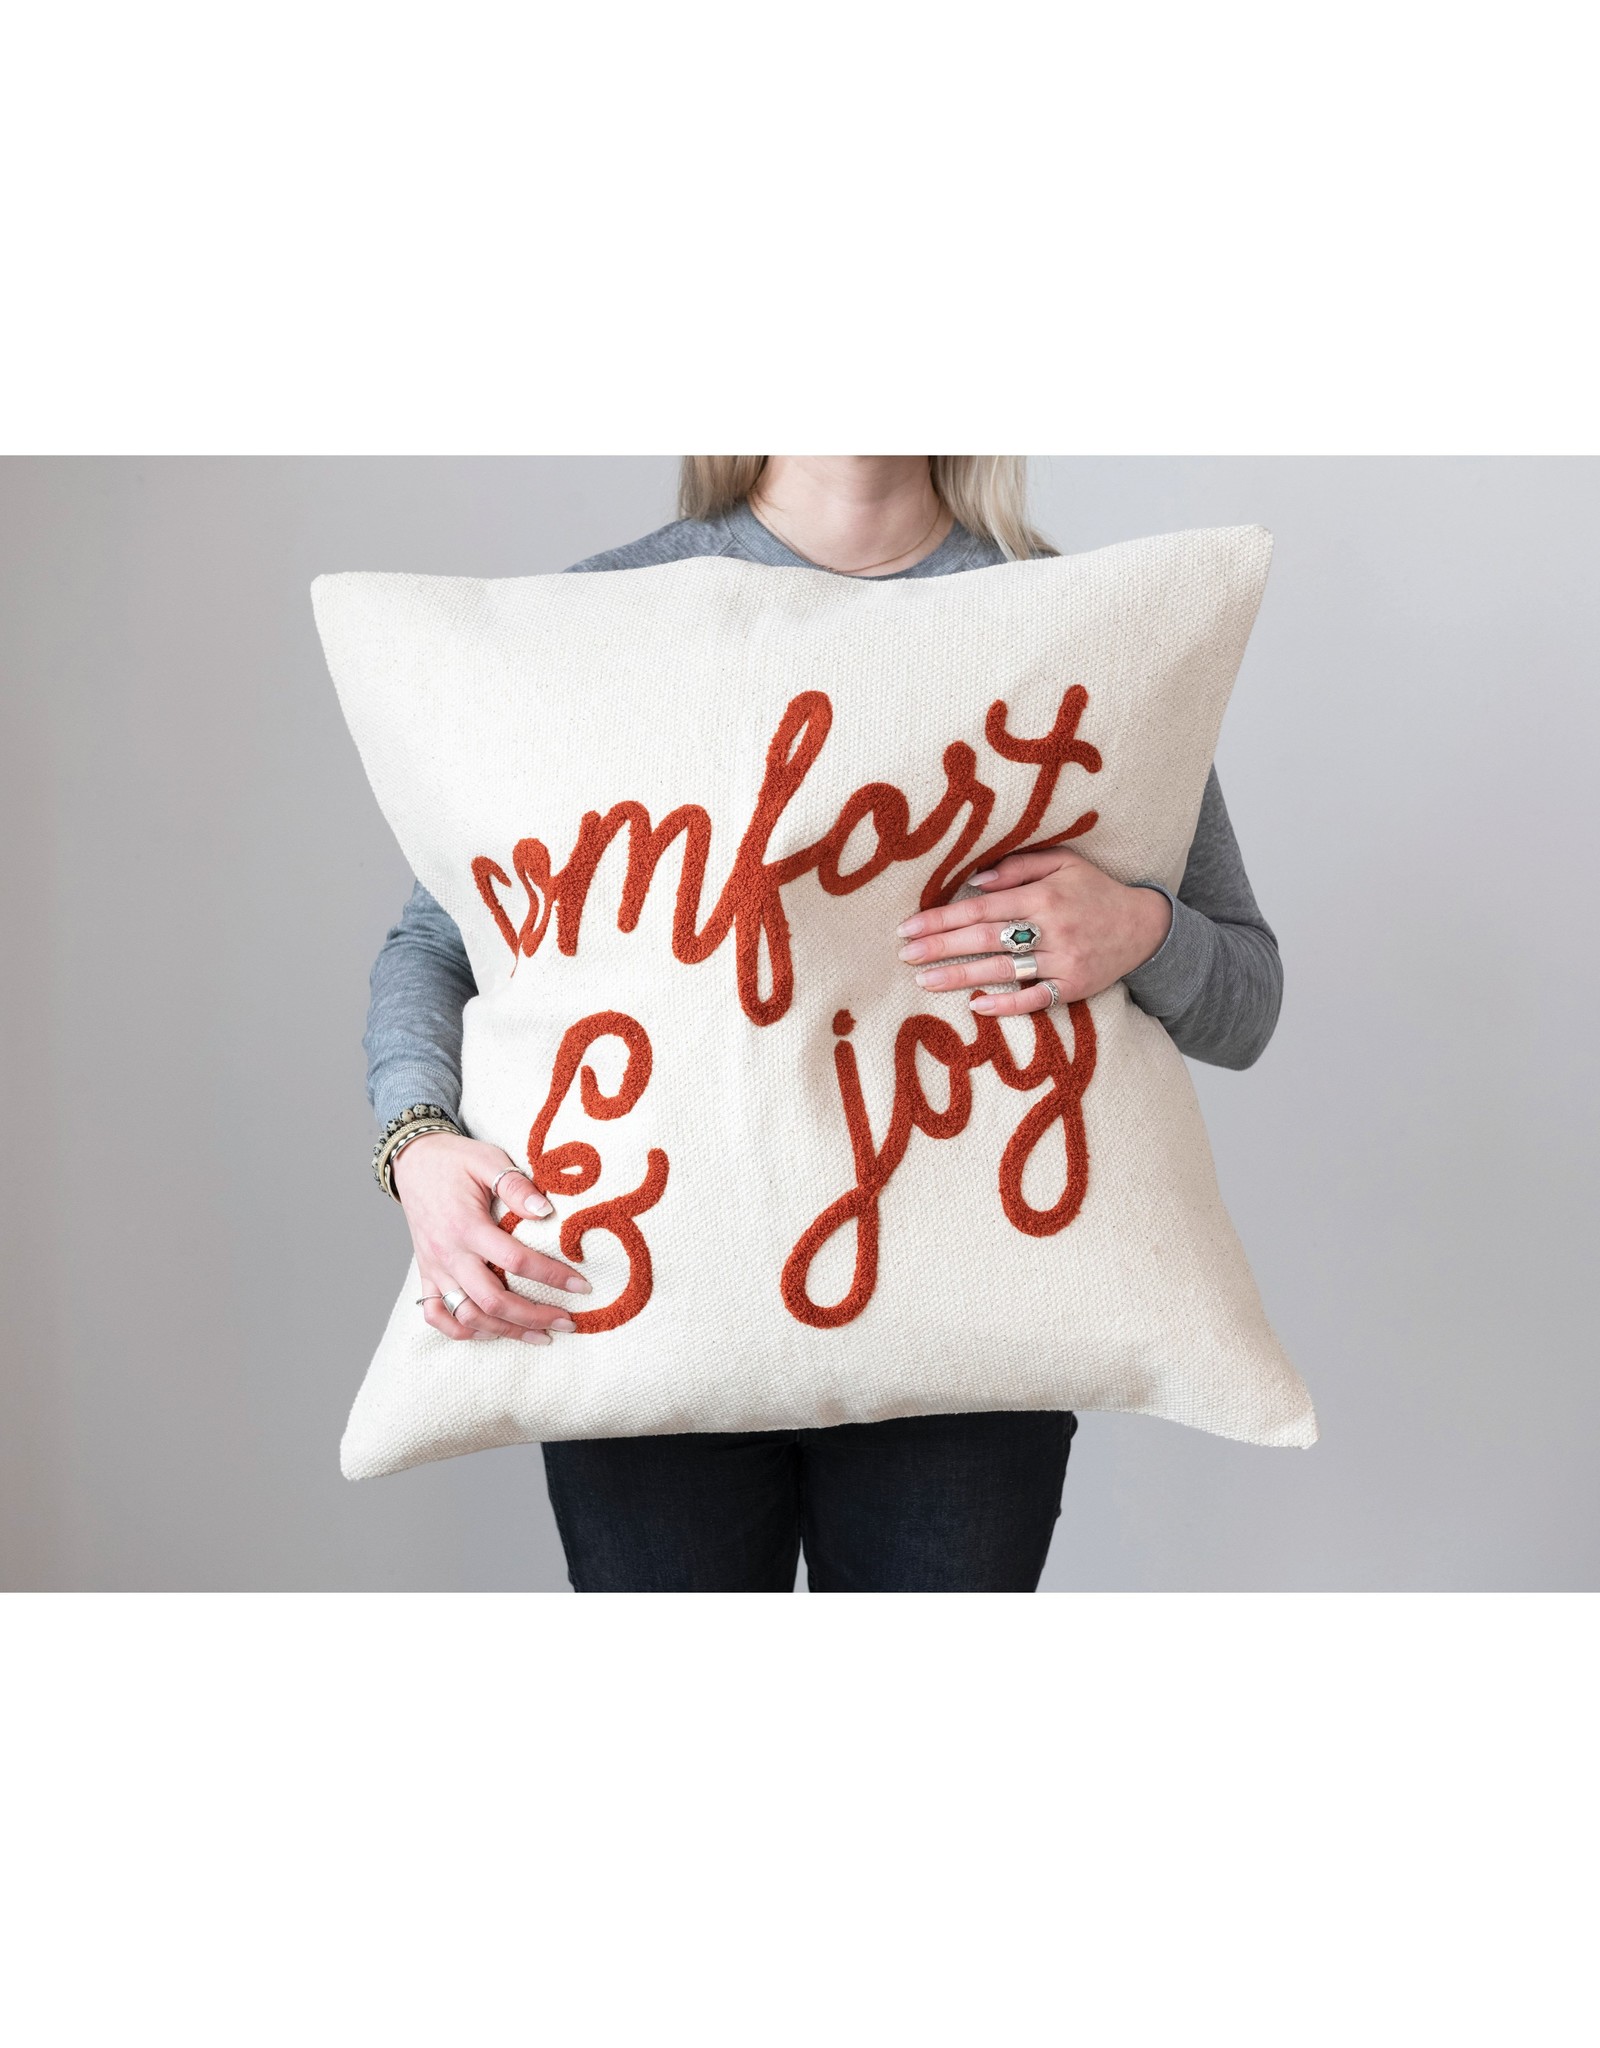 "Comfort & Joy" Decorative Pillow